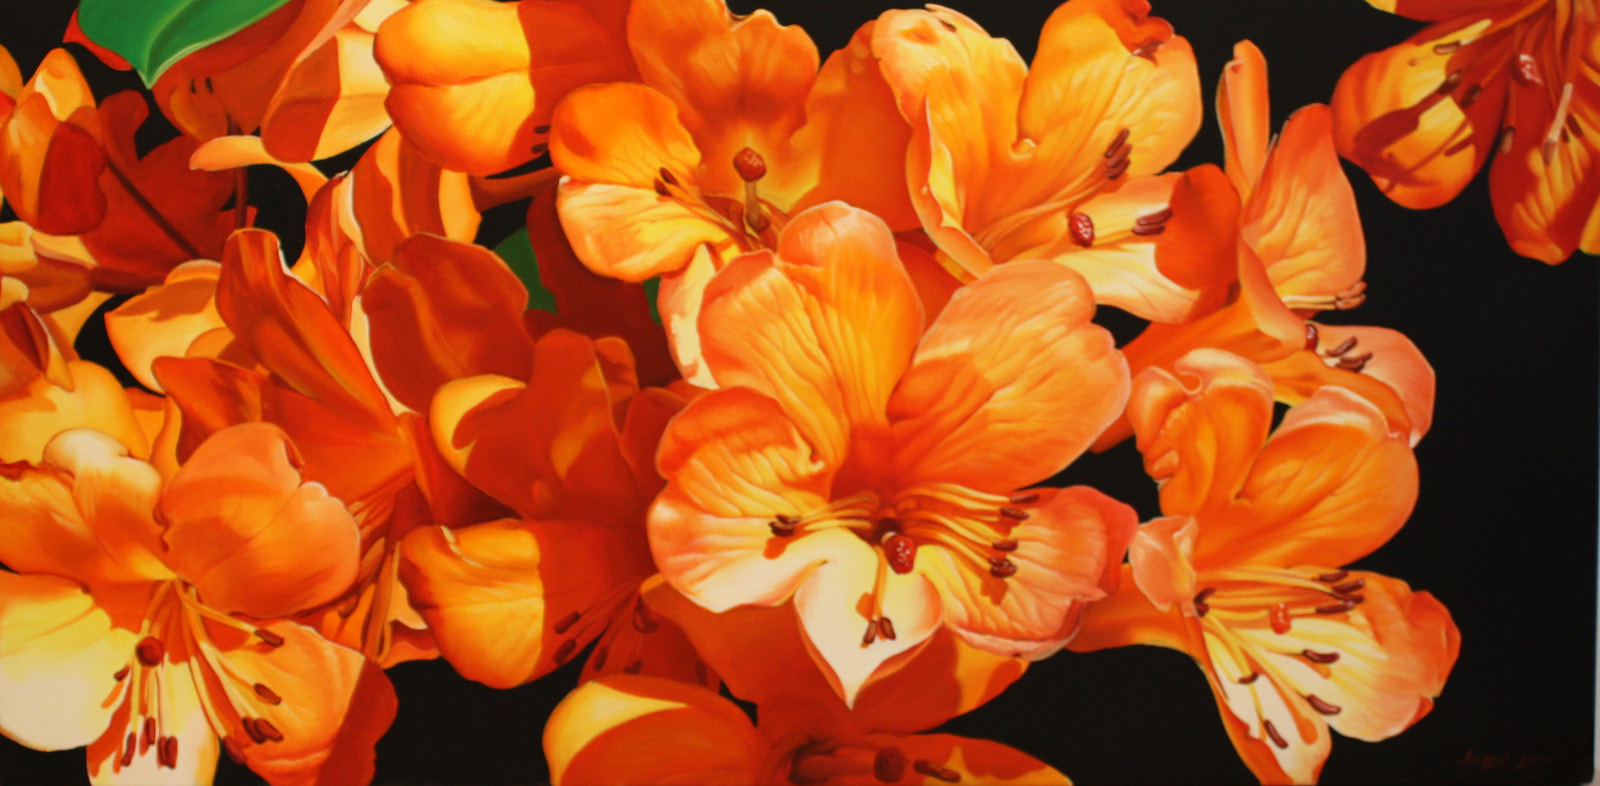 Amber Emm, "Orange Veraya", Oil on Canvas, 1200 x 600mm, Floral Painting